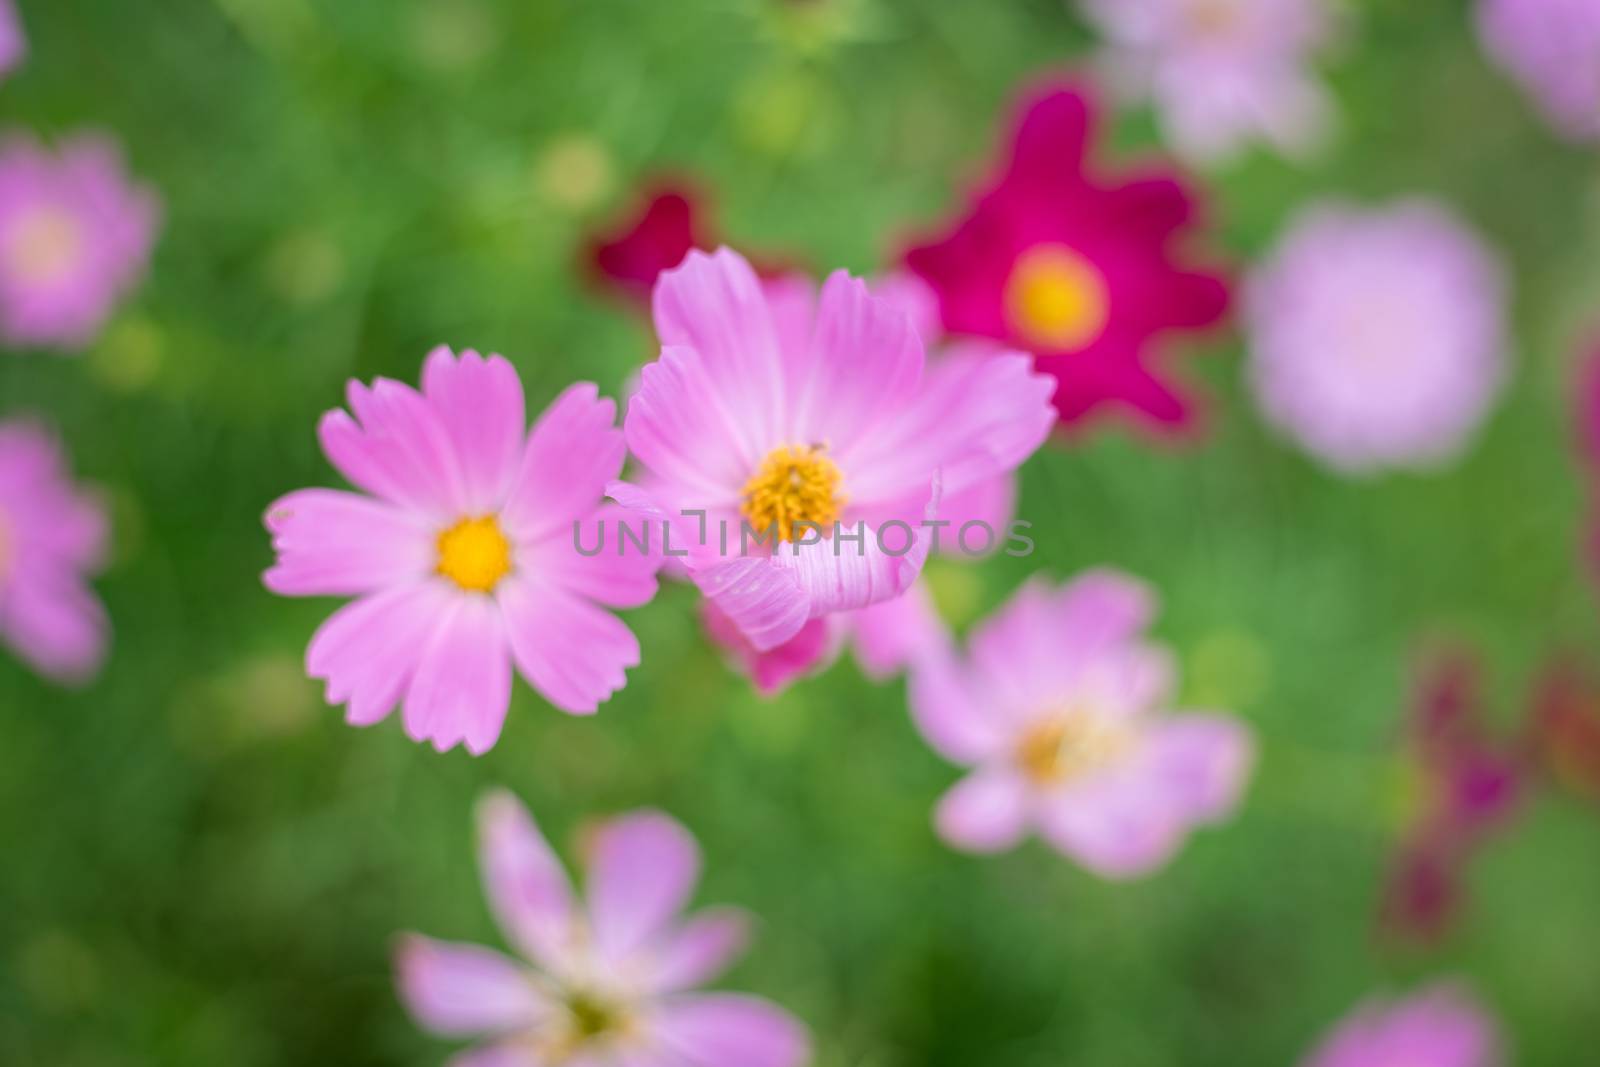 pink cosmos flower in garden, cosmos bipinnatus